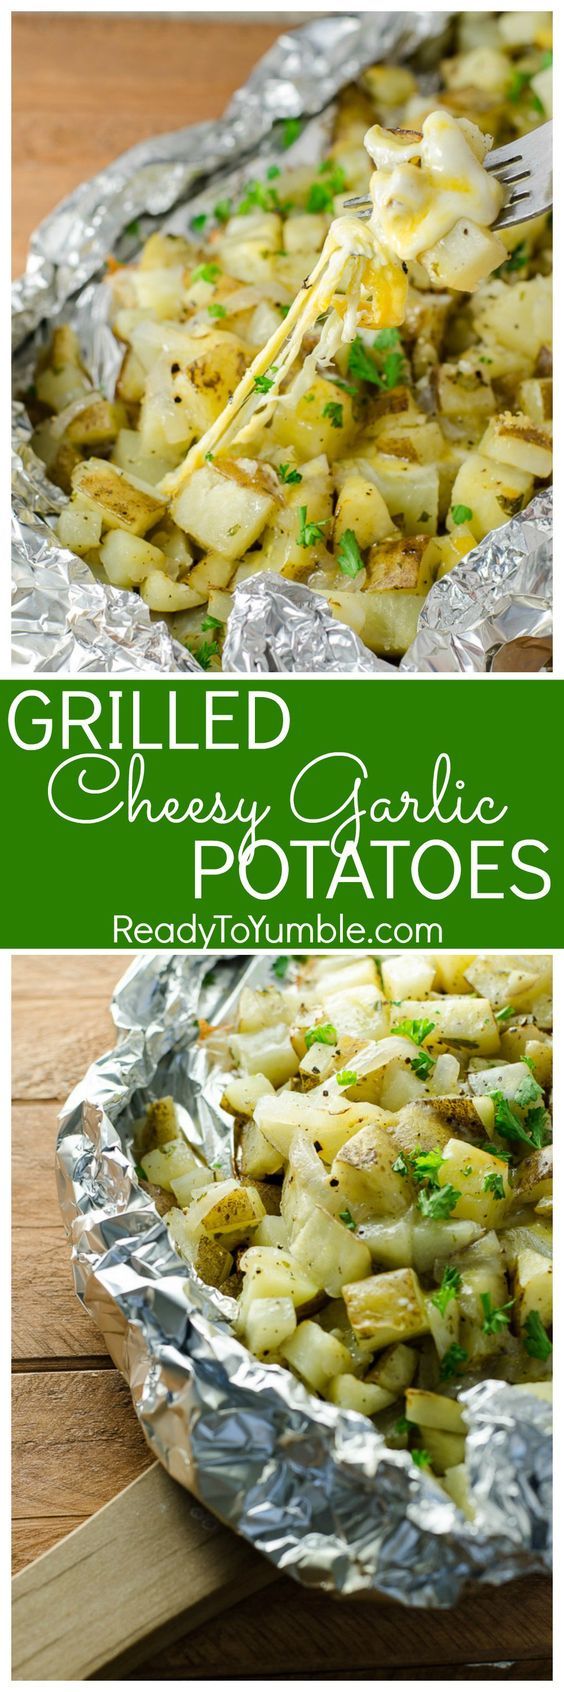 Grilled Cheesy Garlic Potatoes by ReadyToYumble.com